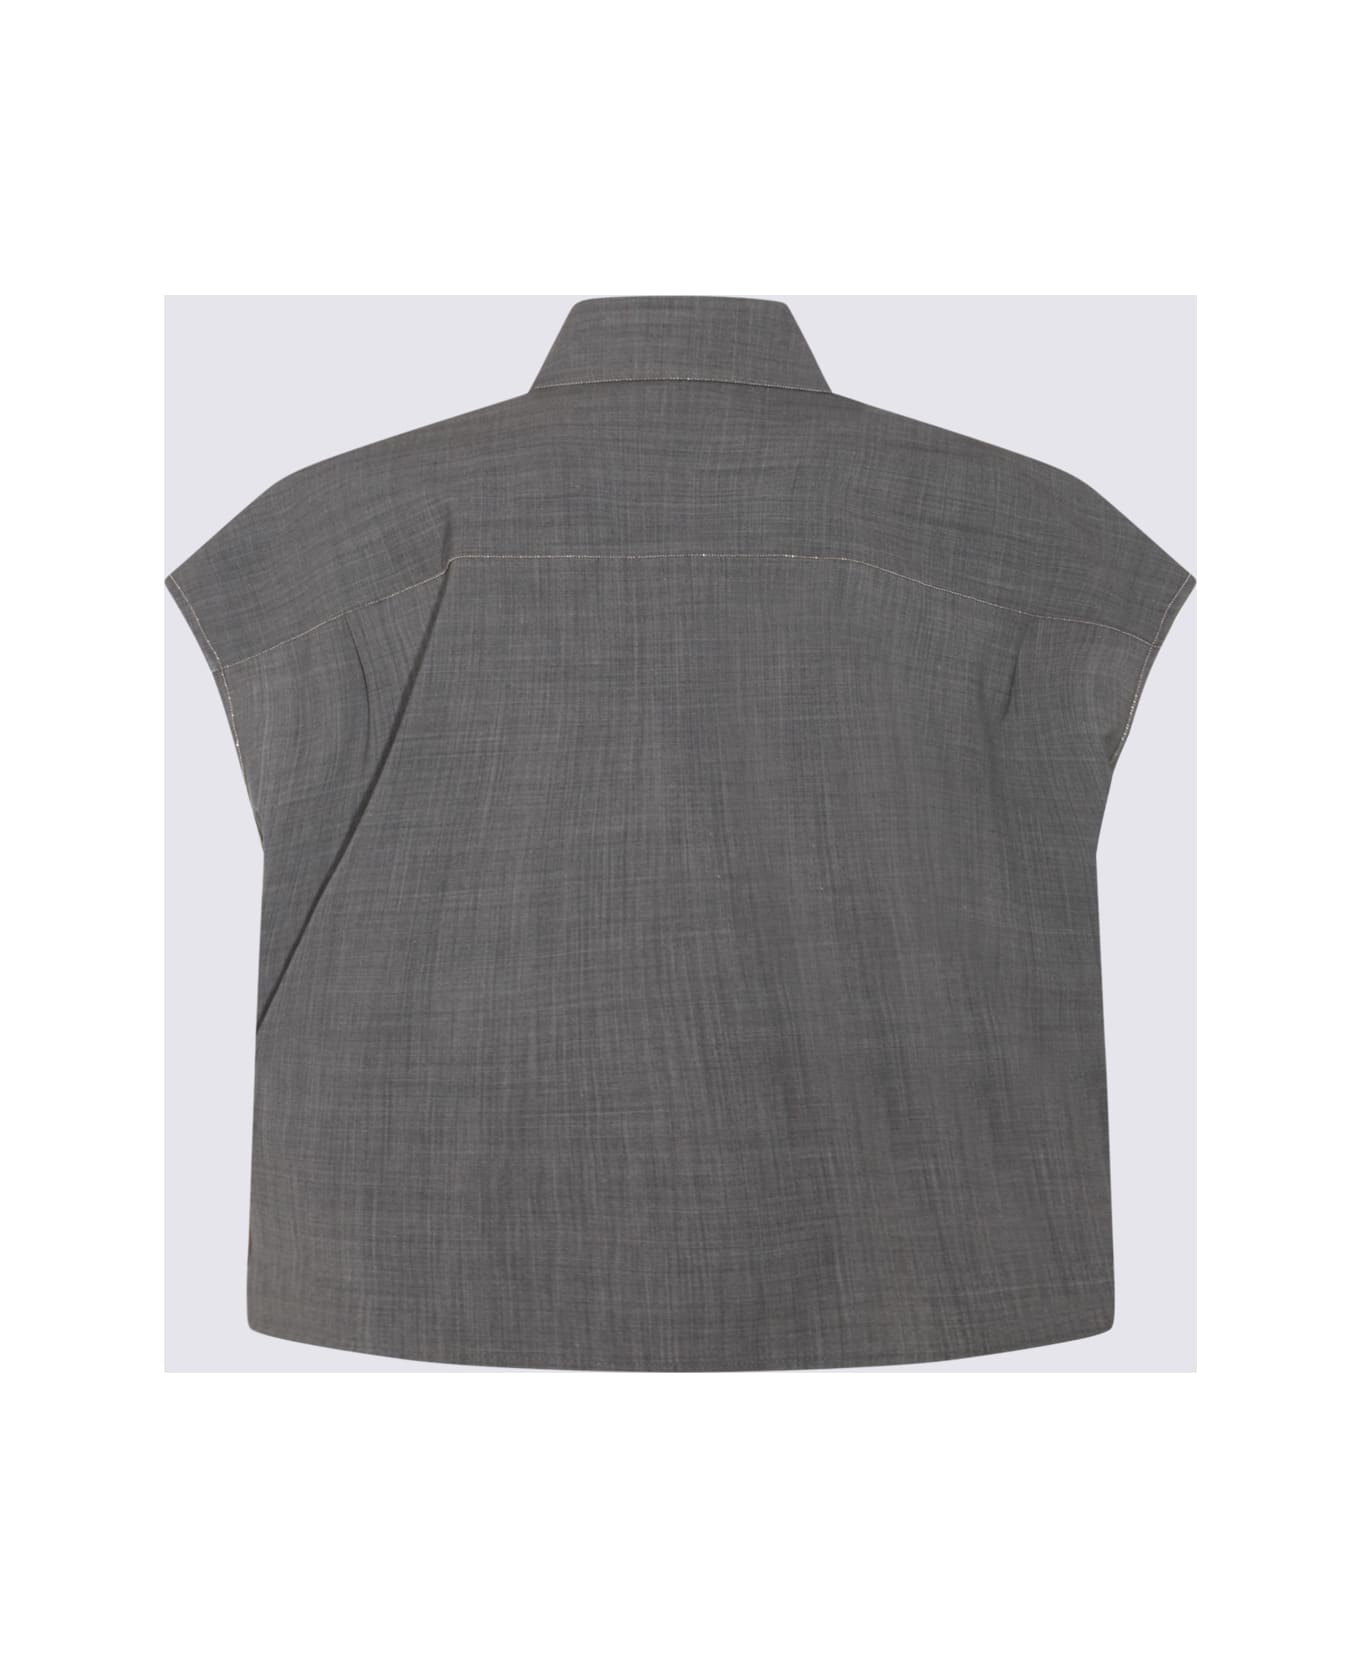 Fabiana Filippi Grey Wool Blend Shirt - ROCCIA MELANGE シャツ